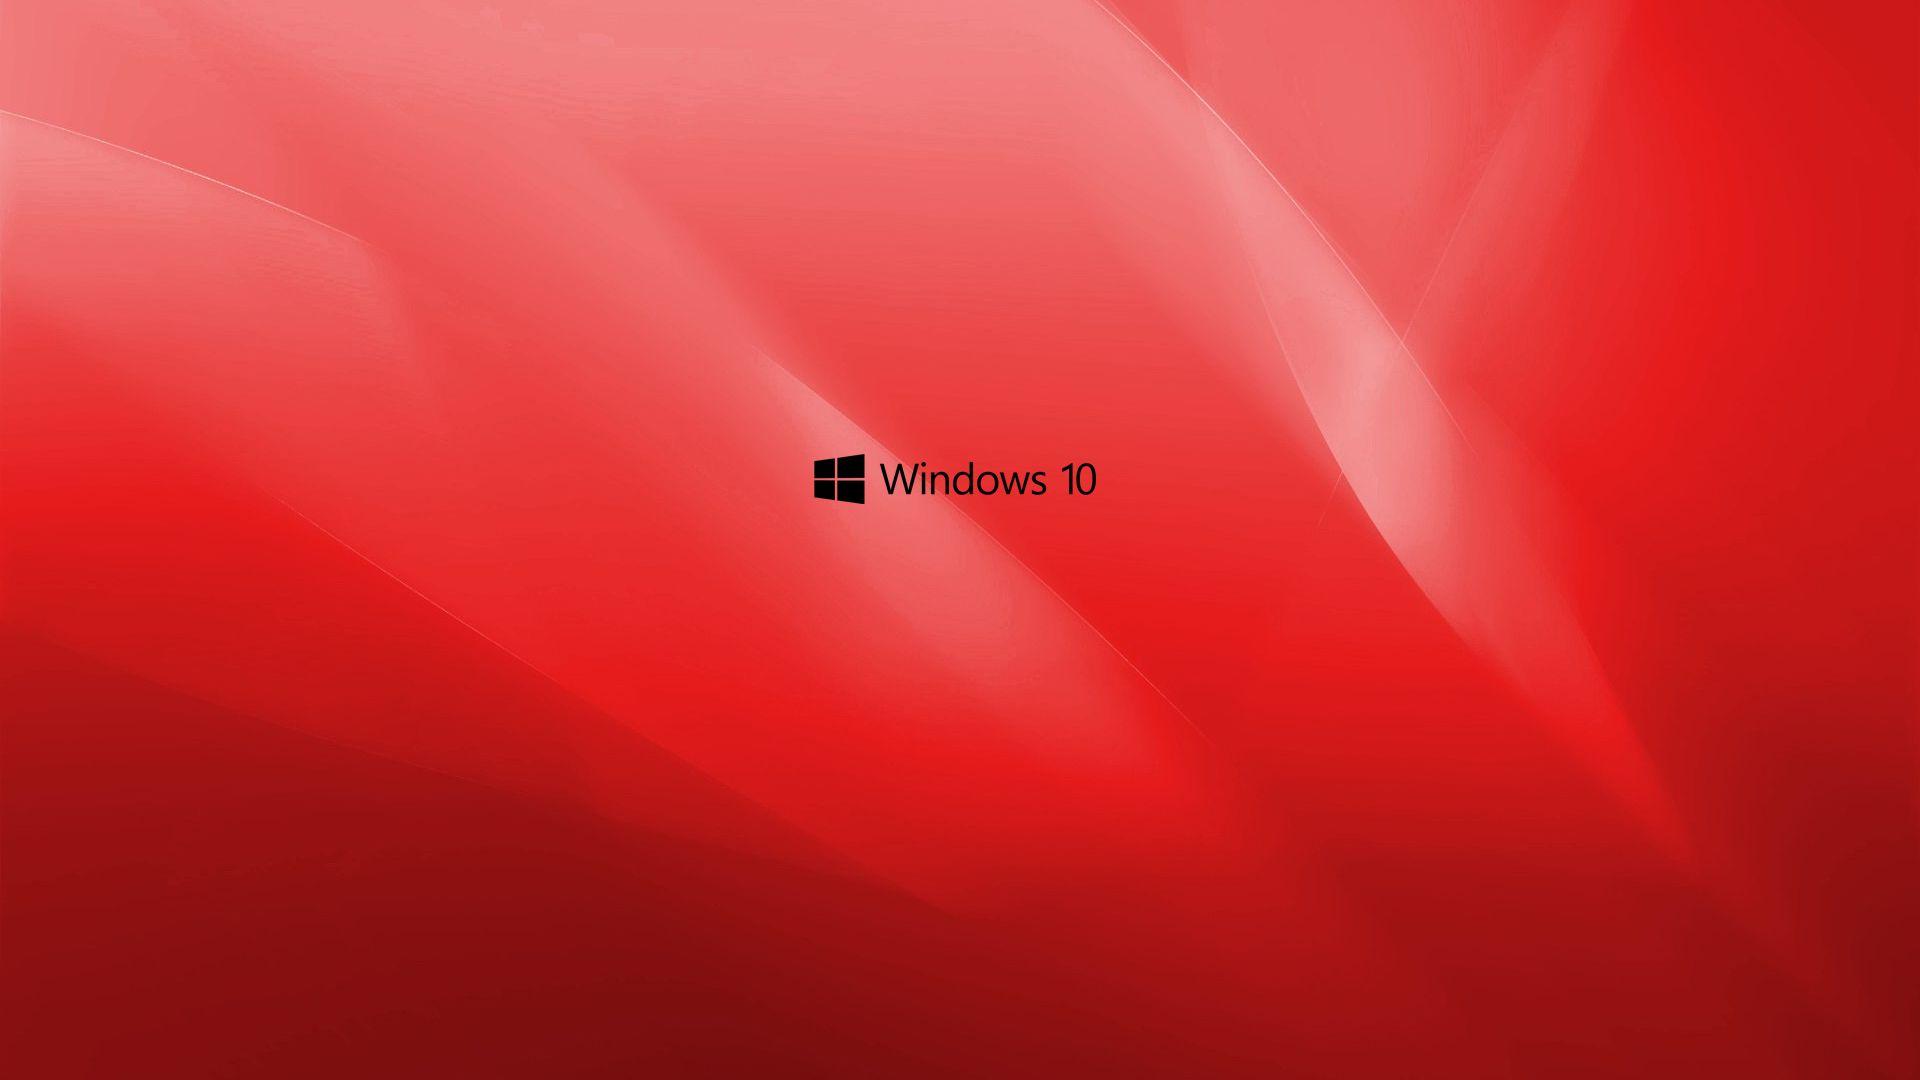 4k Wallpaper Windows 10 Red Wallpaper Hd 1920x1080 